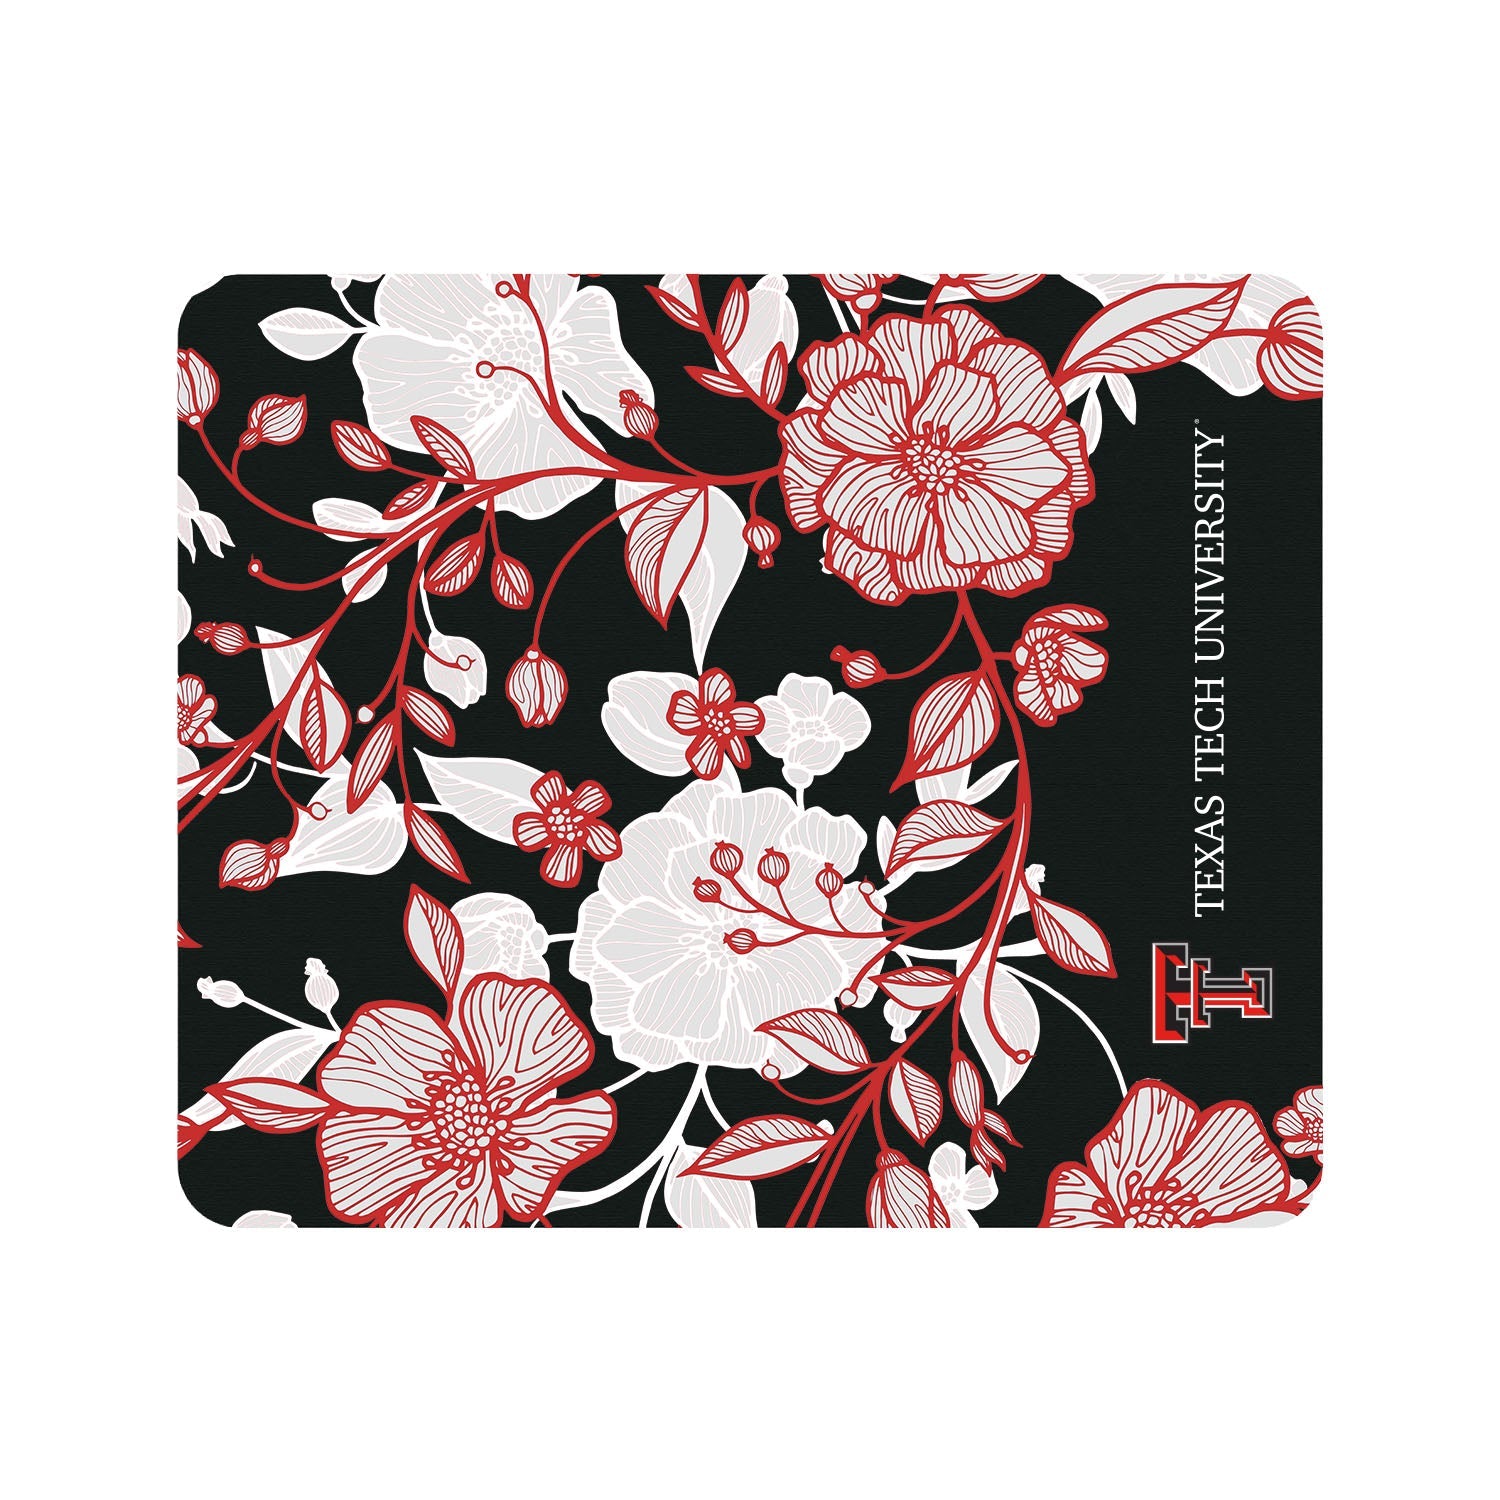 Texas Tech University Black Mousepad, Floral Lace V1